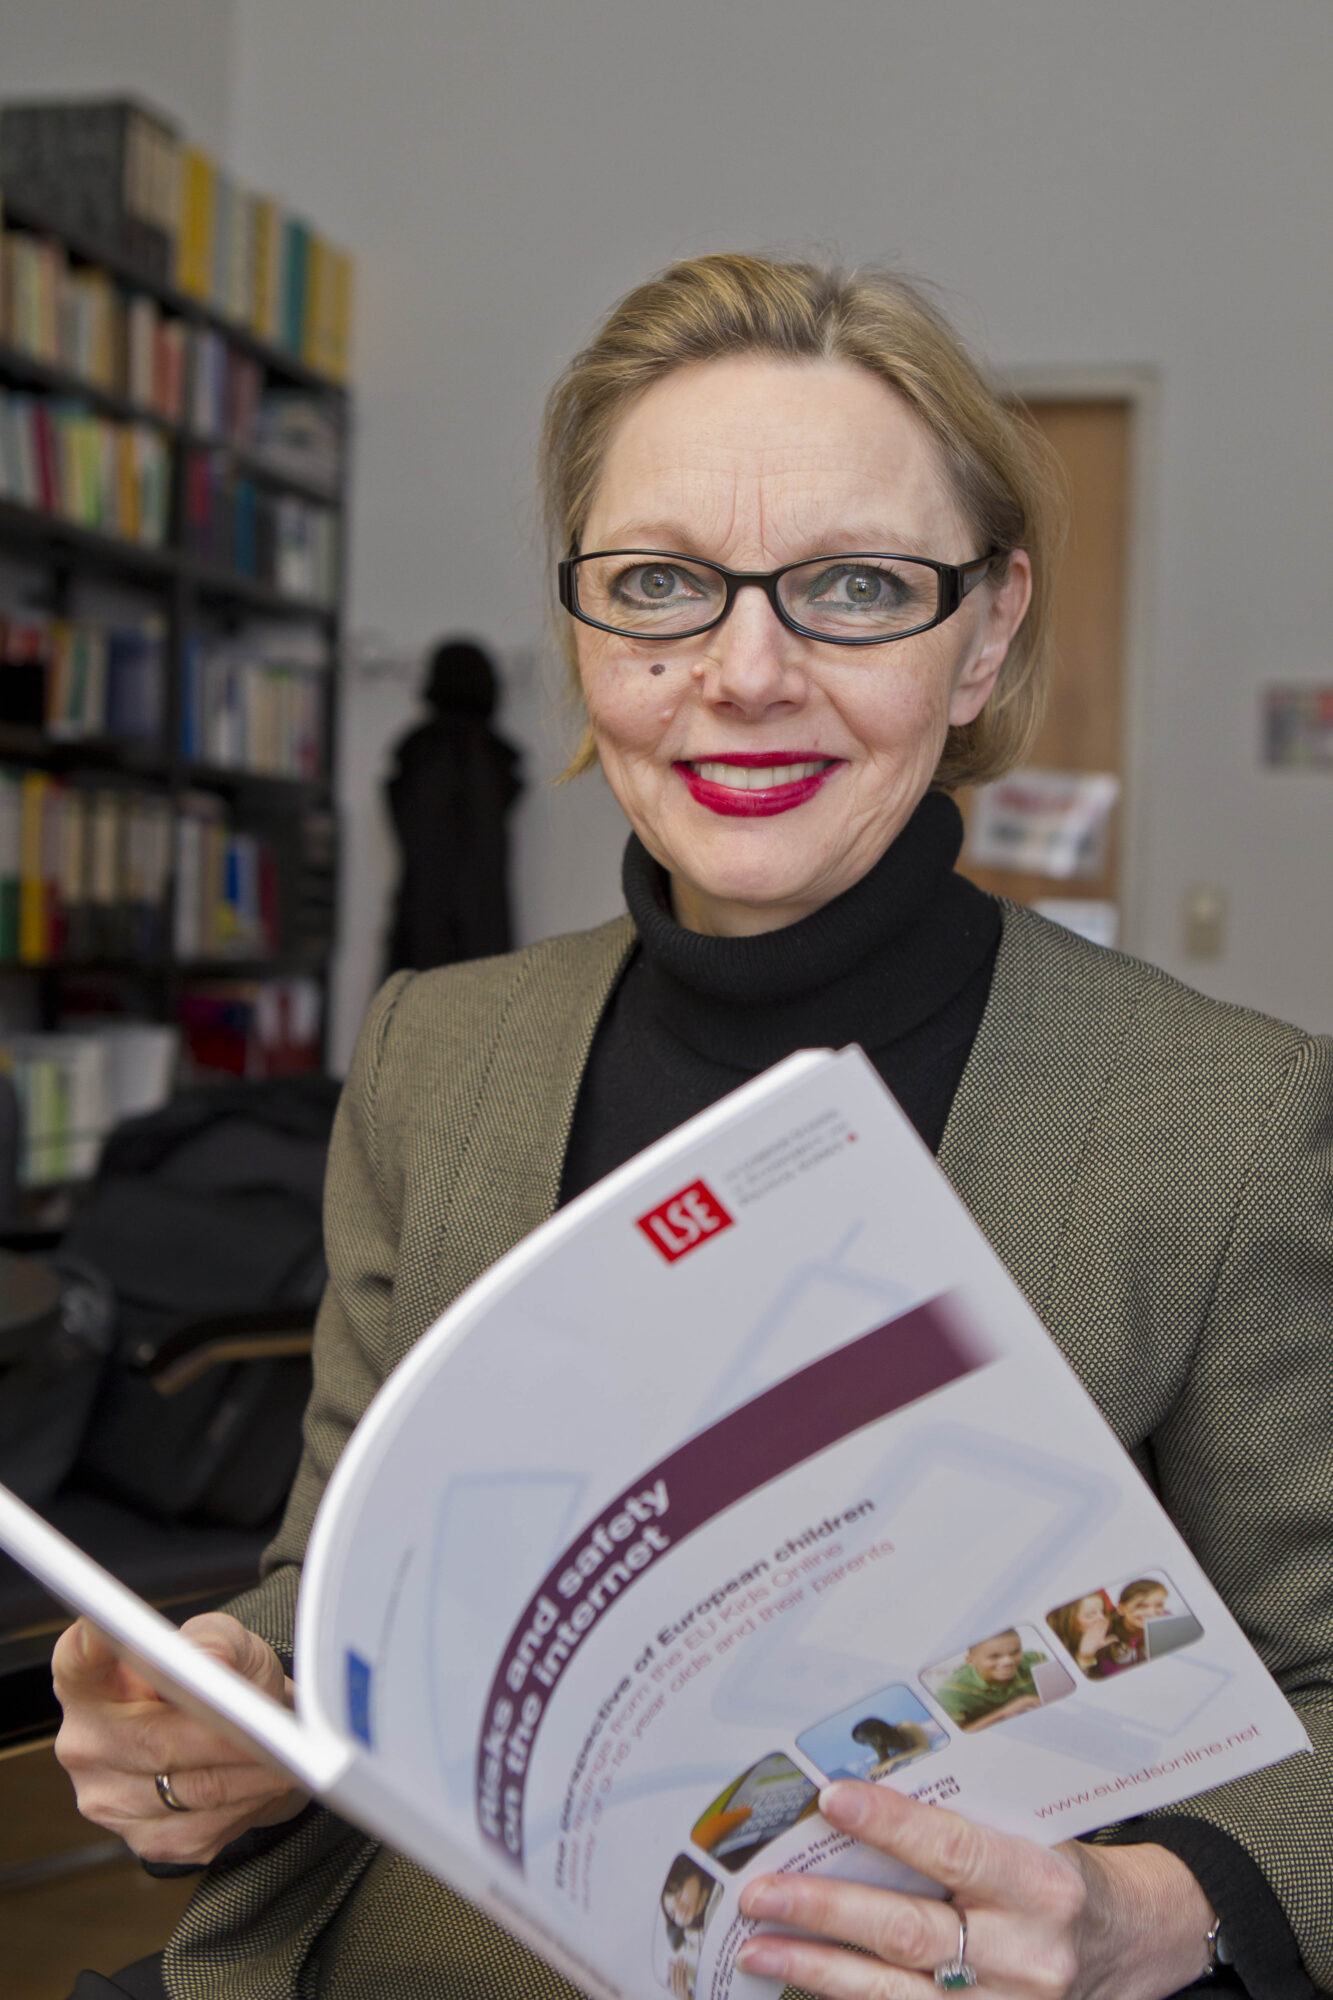 Univ. Prof. Dr. Ingrid Paus-Hasebrink. Foto: Andreas Kolarik, 21.10.10